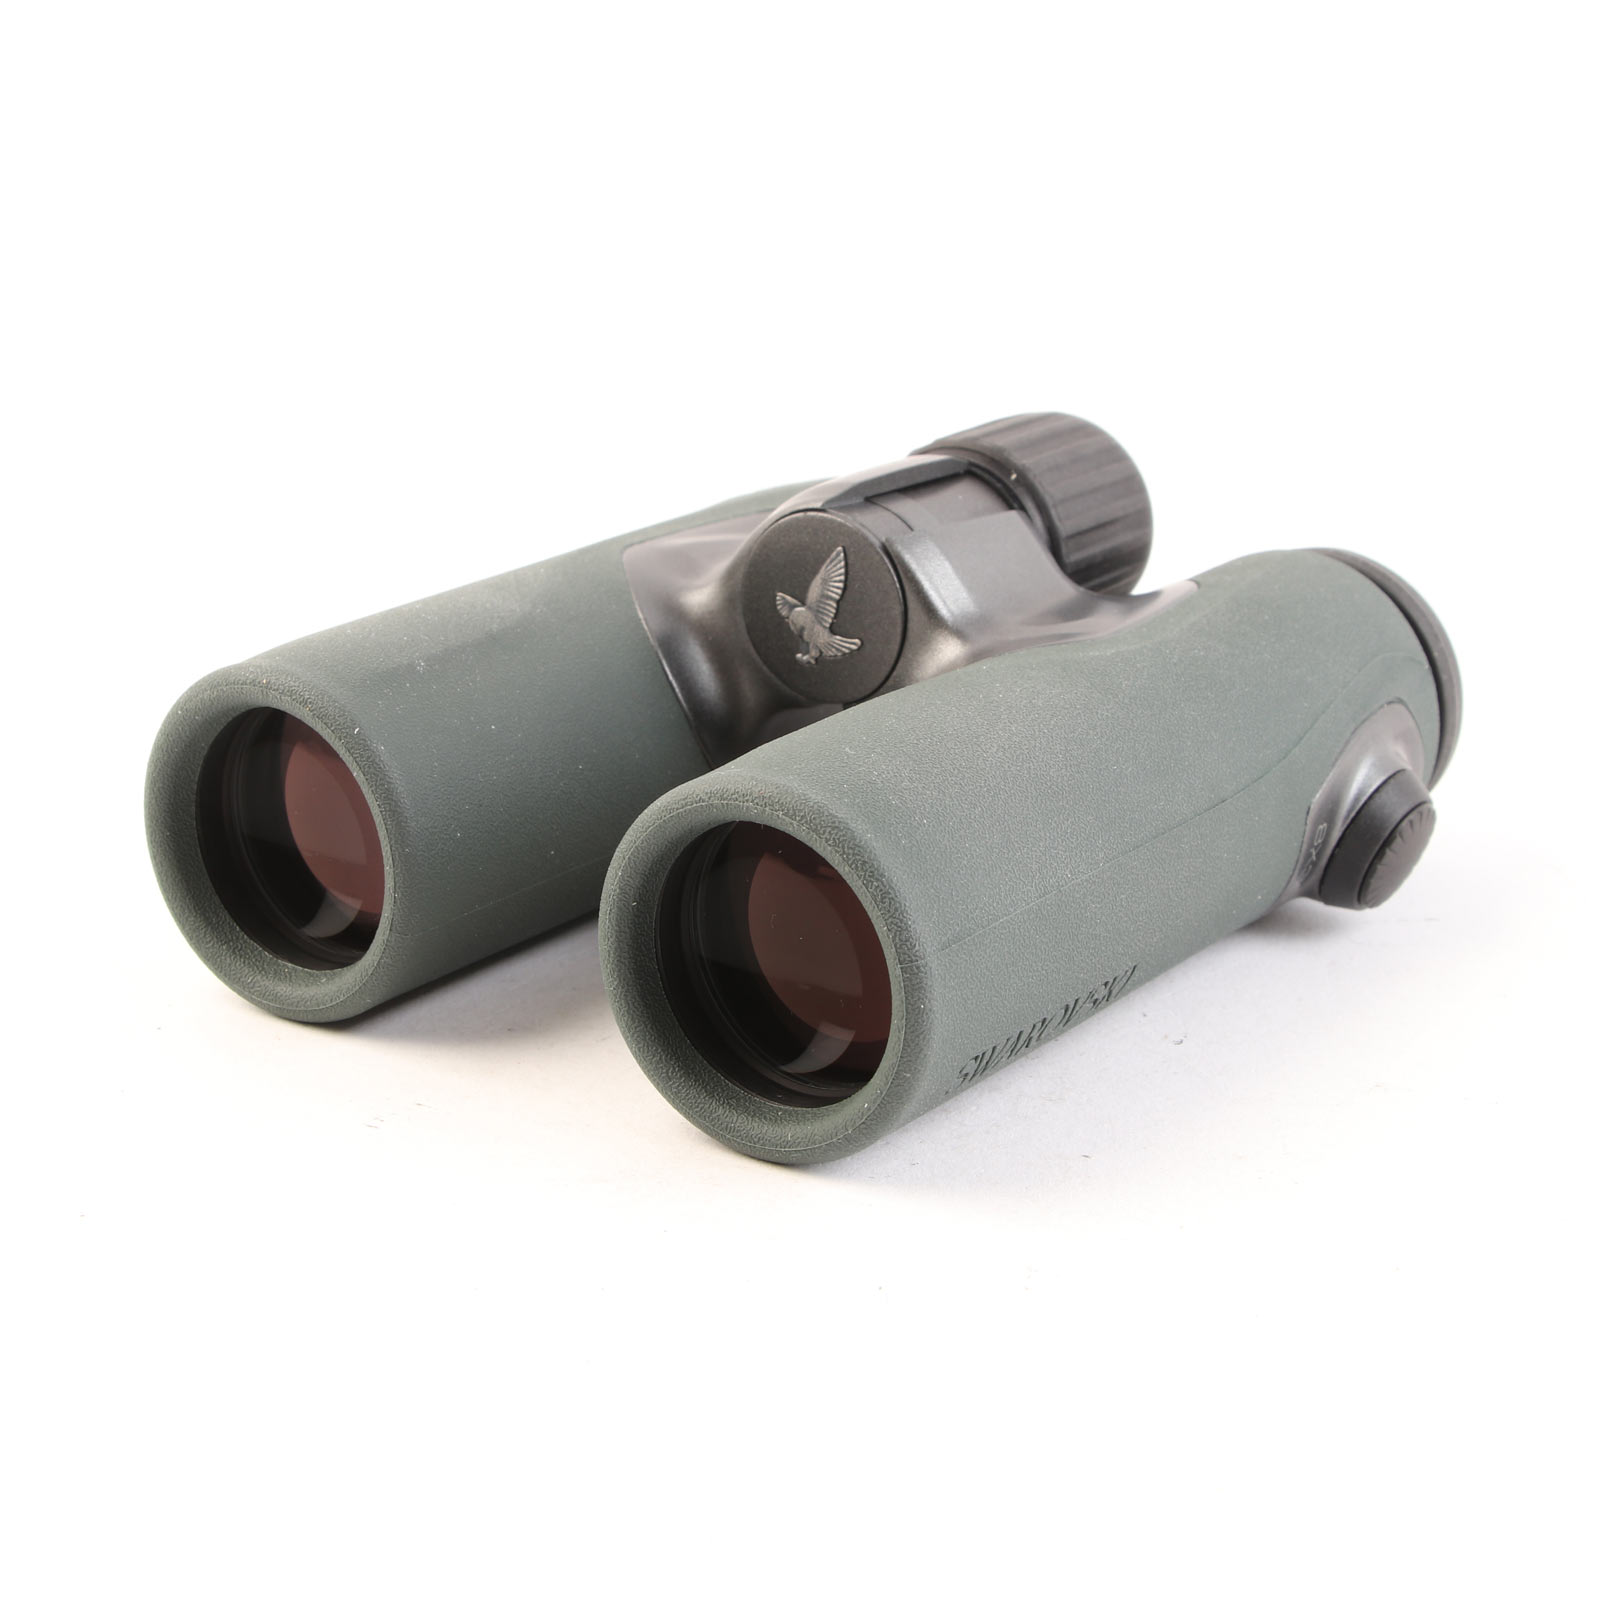 USED Swarovski CL Companion 8x30 Binoculars - Green - Wild Nature